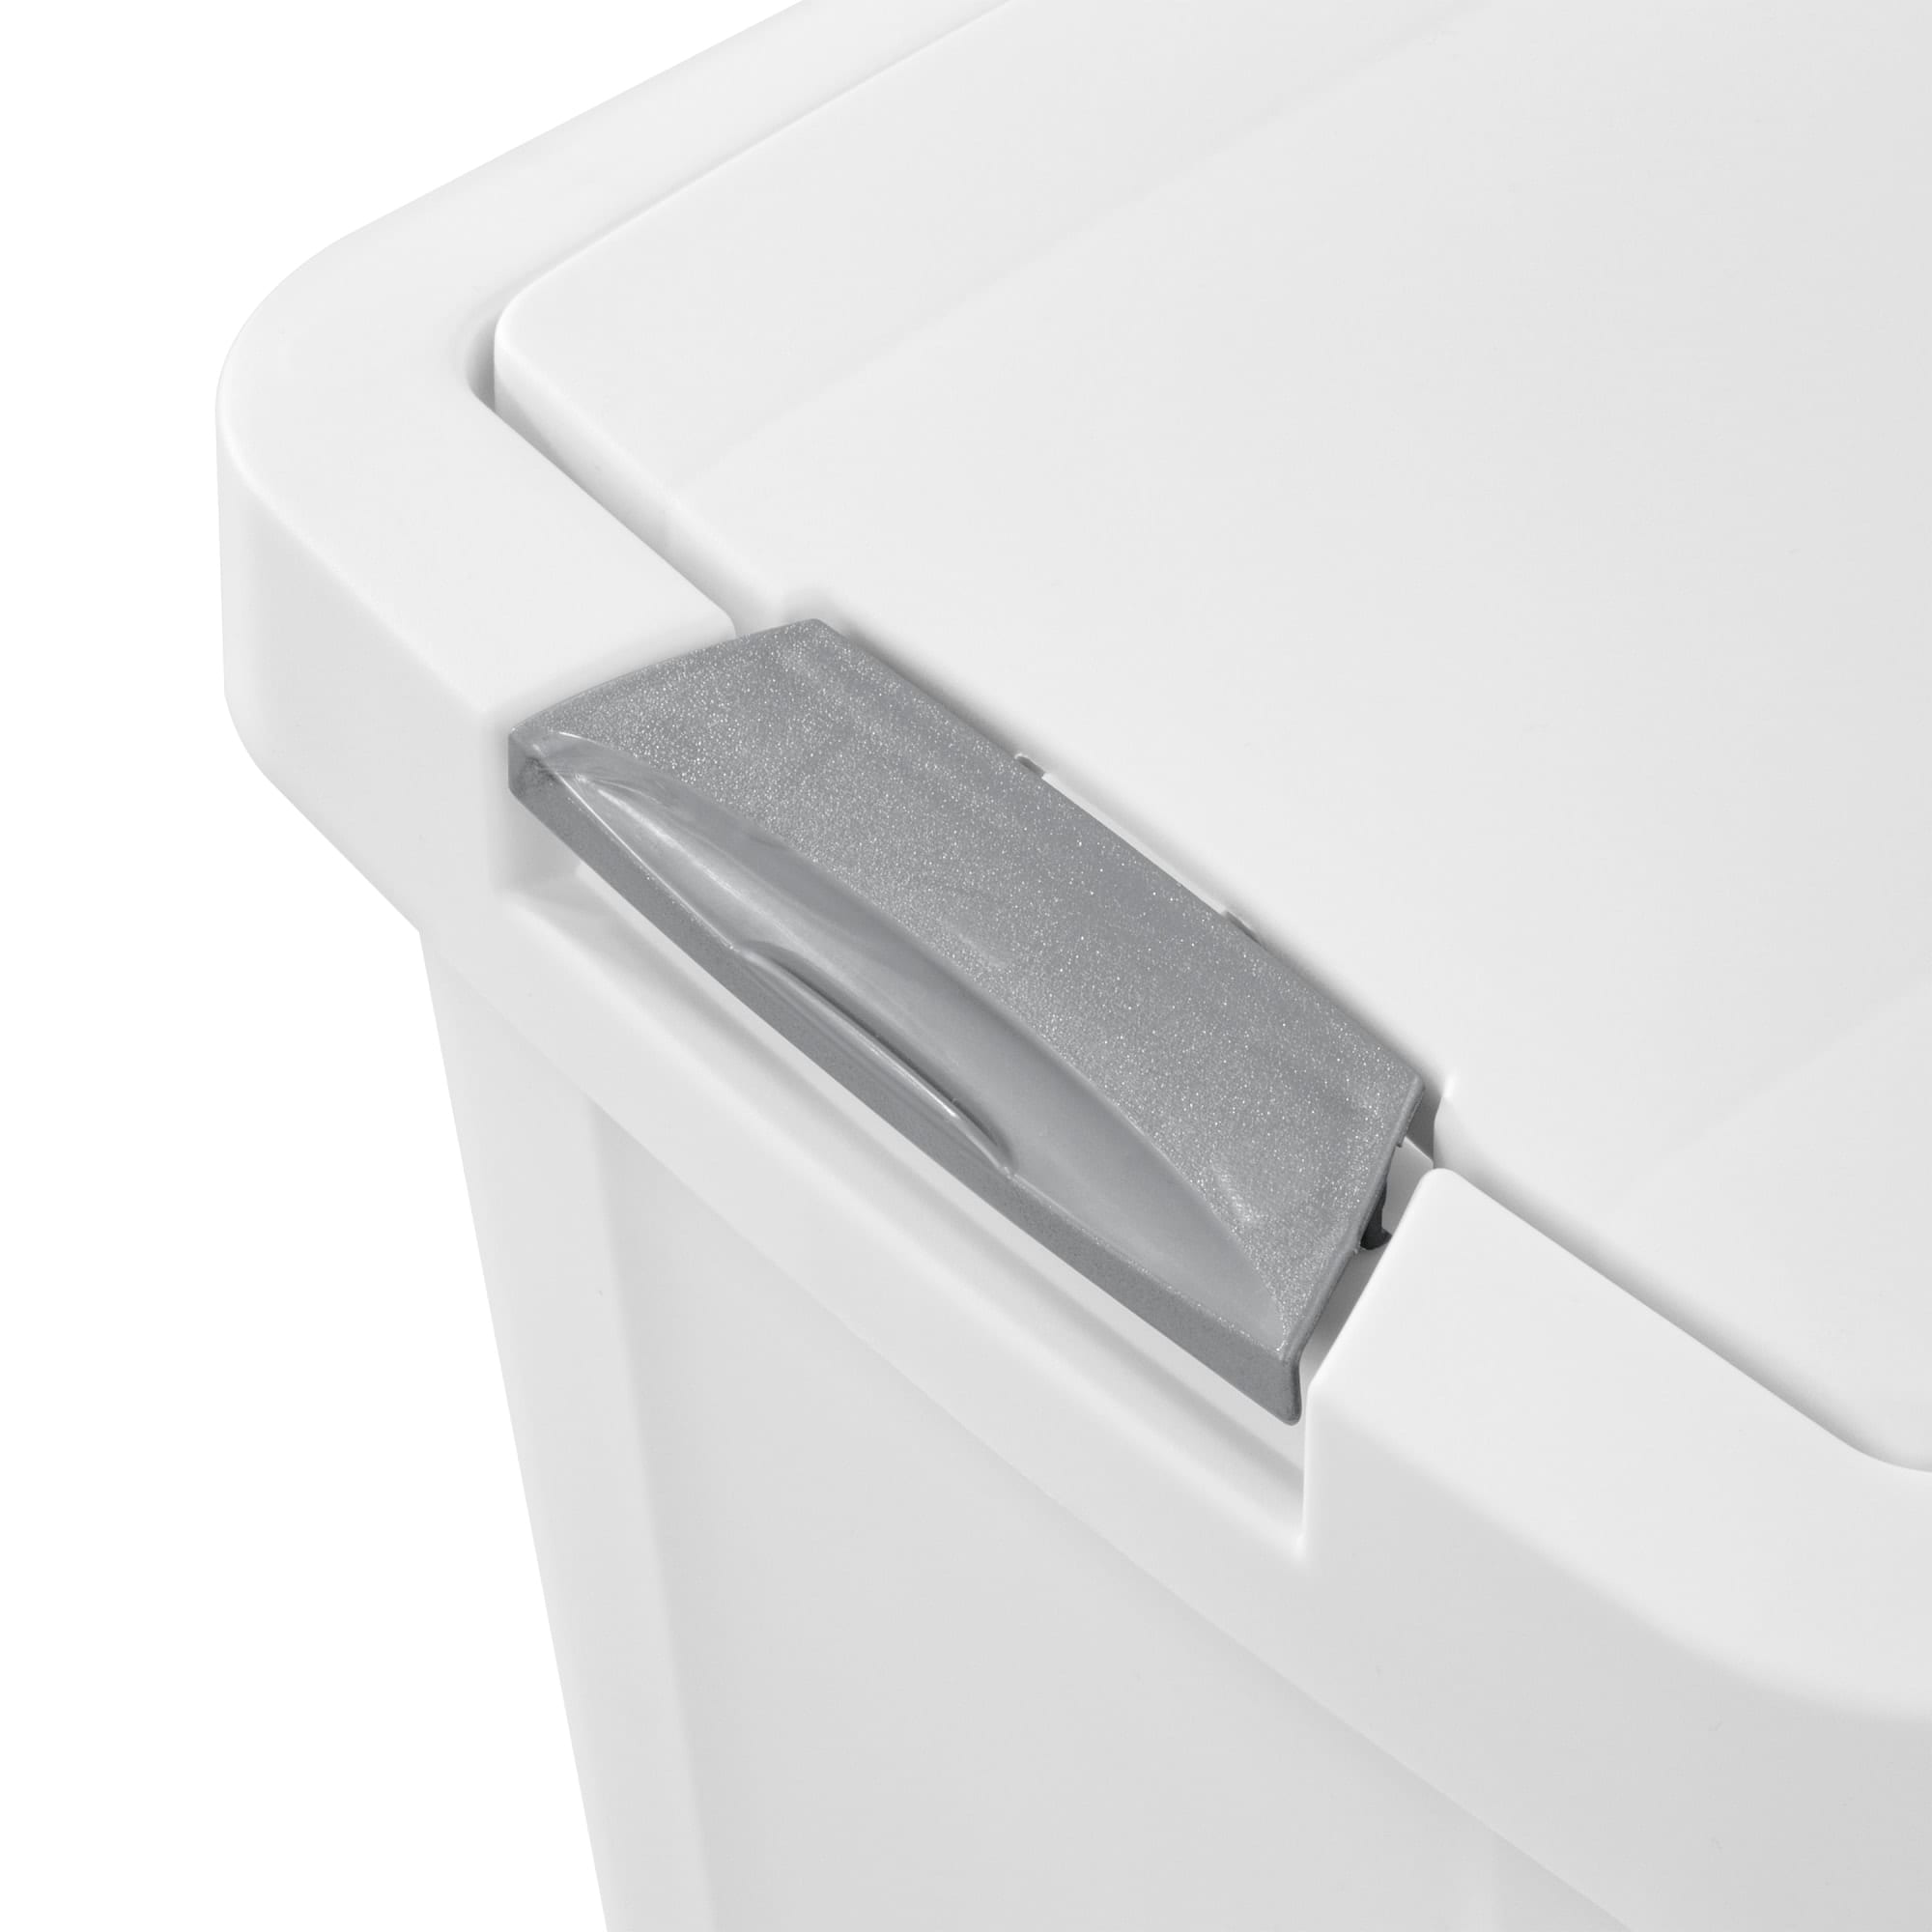 Sterilite  7.5 Gallon / 28 Liter TouchTop™ Wastebasket White $15.00 EACH, CASE PACK OF 4